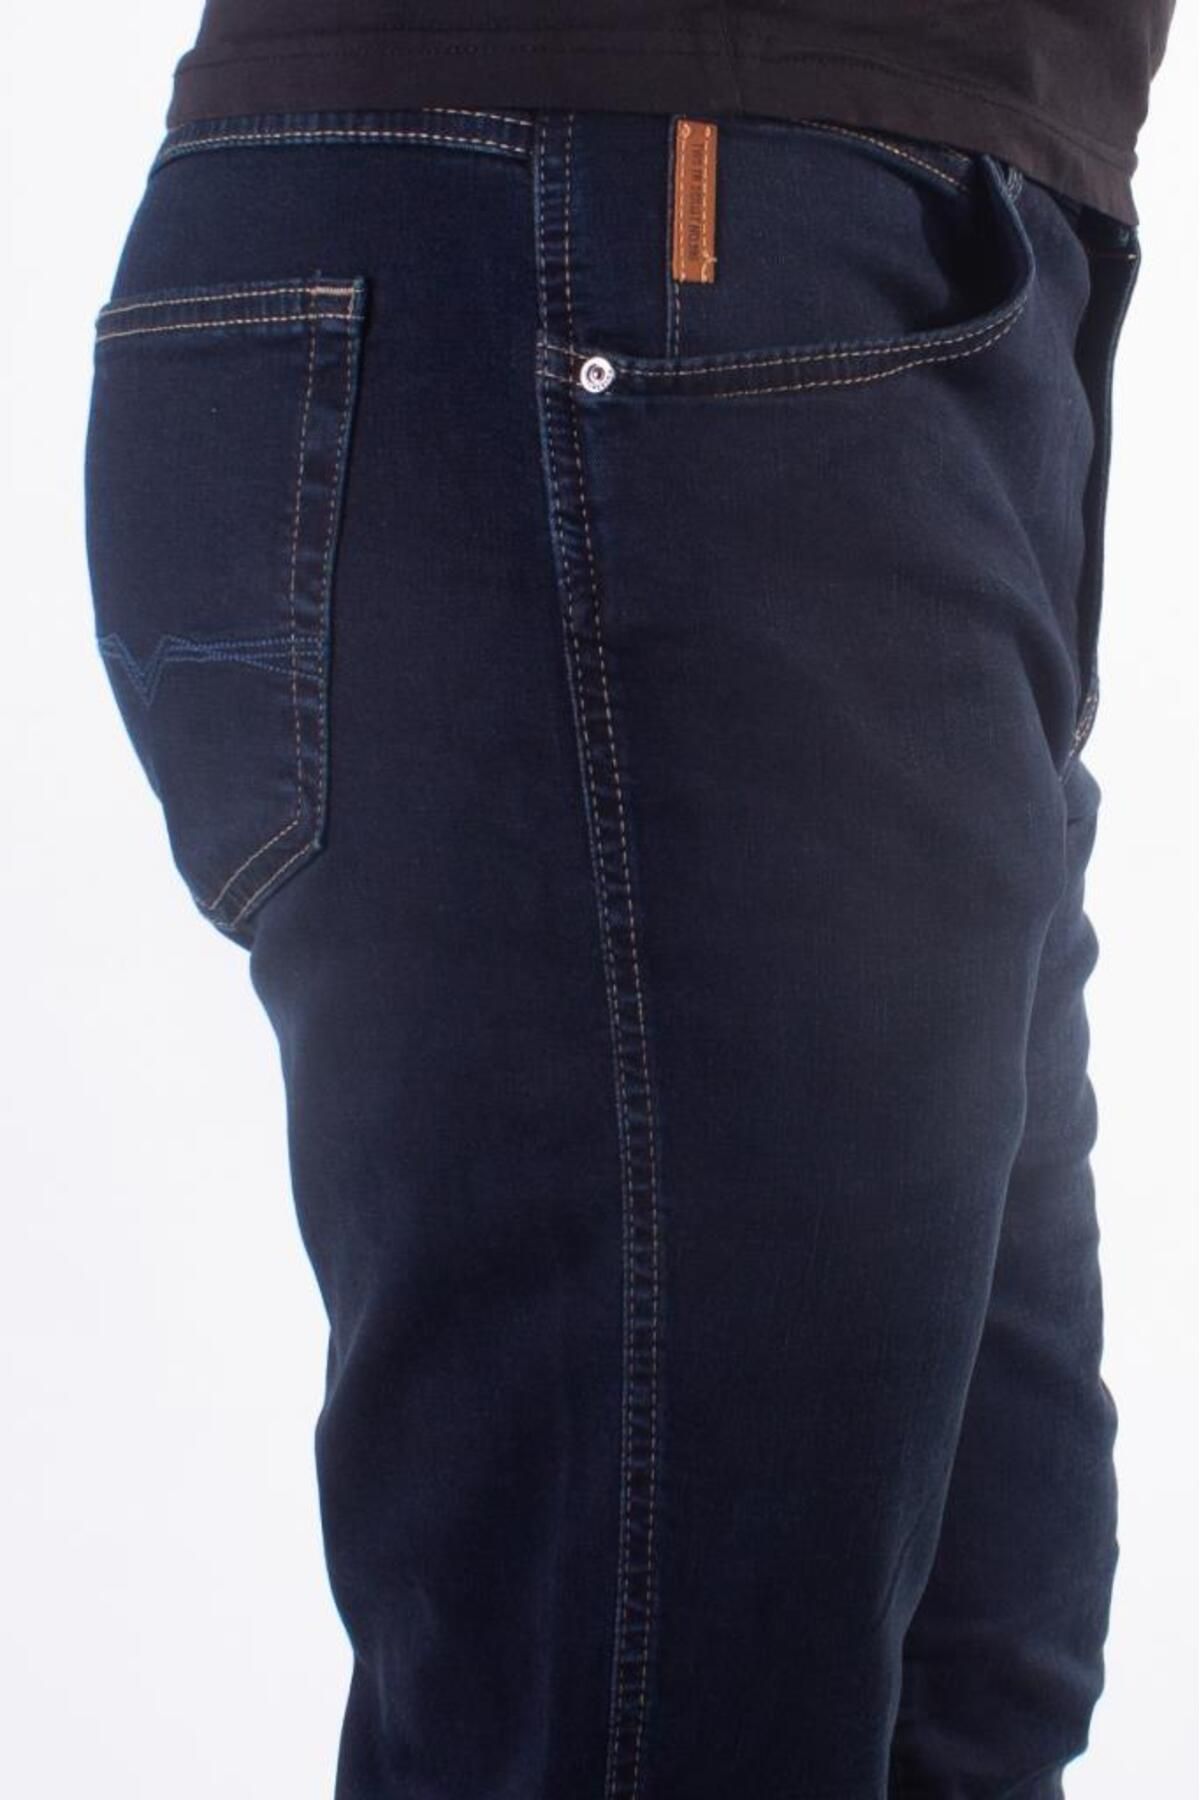 Twister Jeans Twister Vegas 132-245 Lacivert Yüksek Bel Rahat Paça Erkek Jeans Pantolon